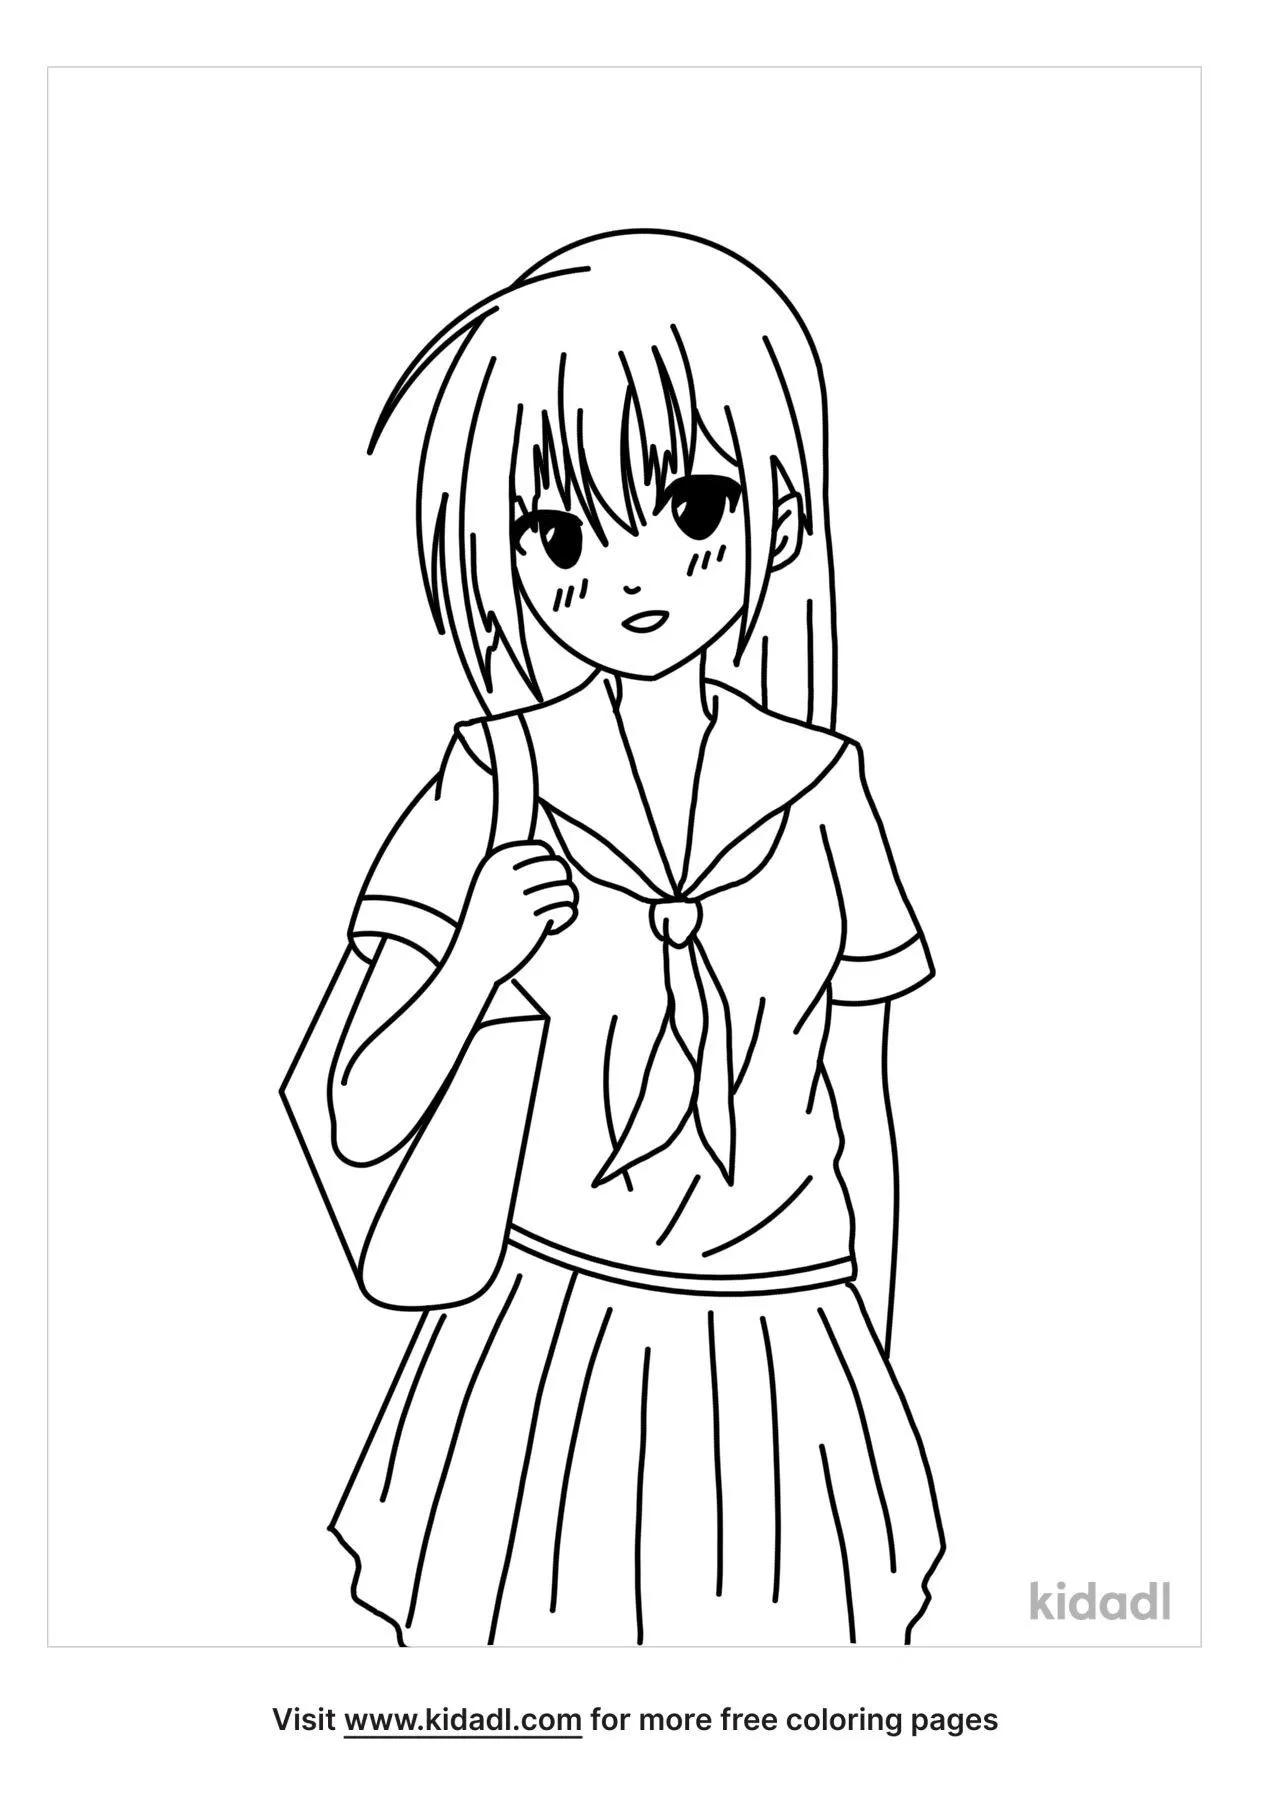 Anime School Girl   Kidadl